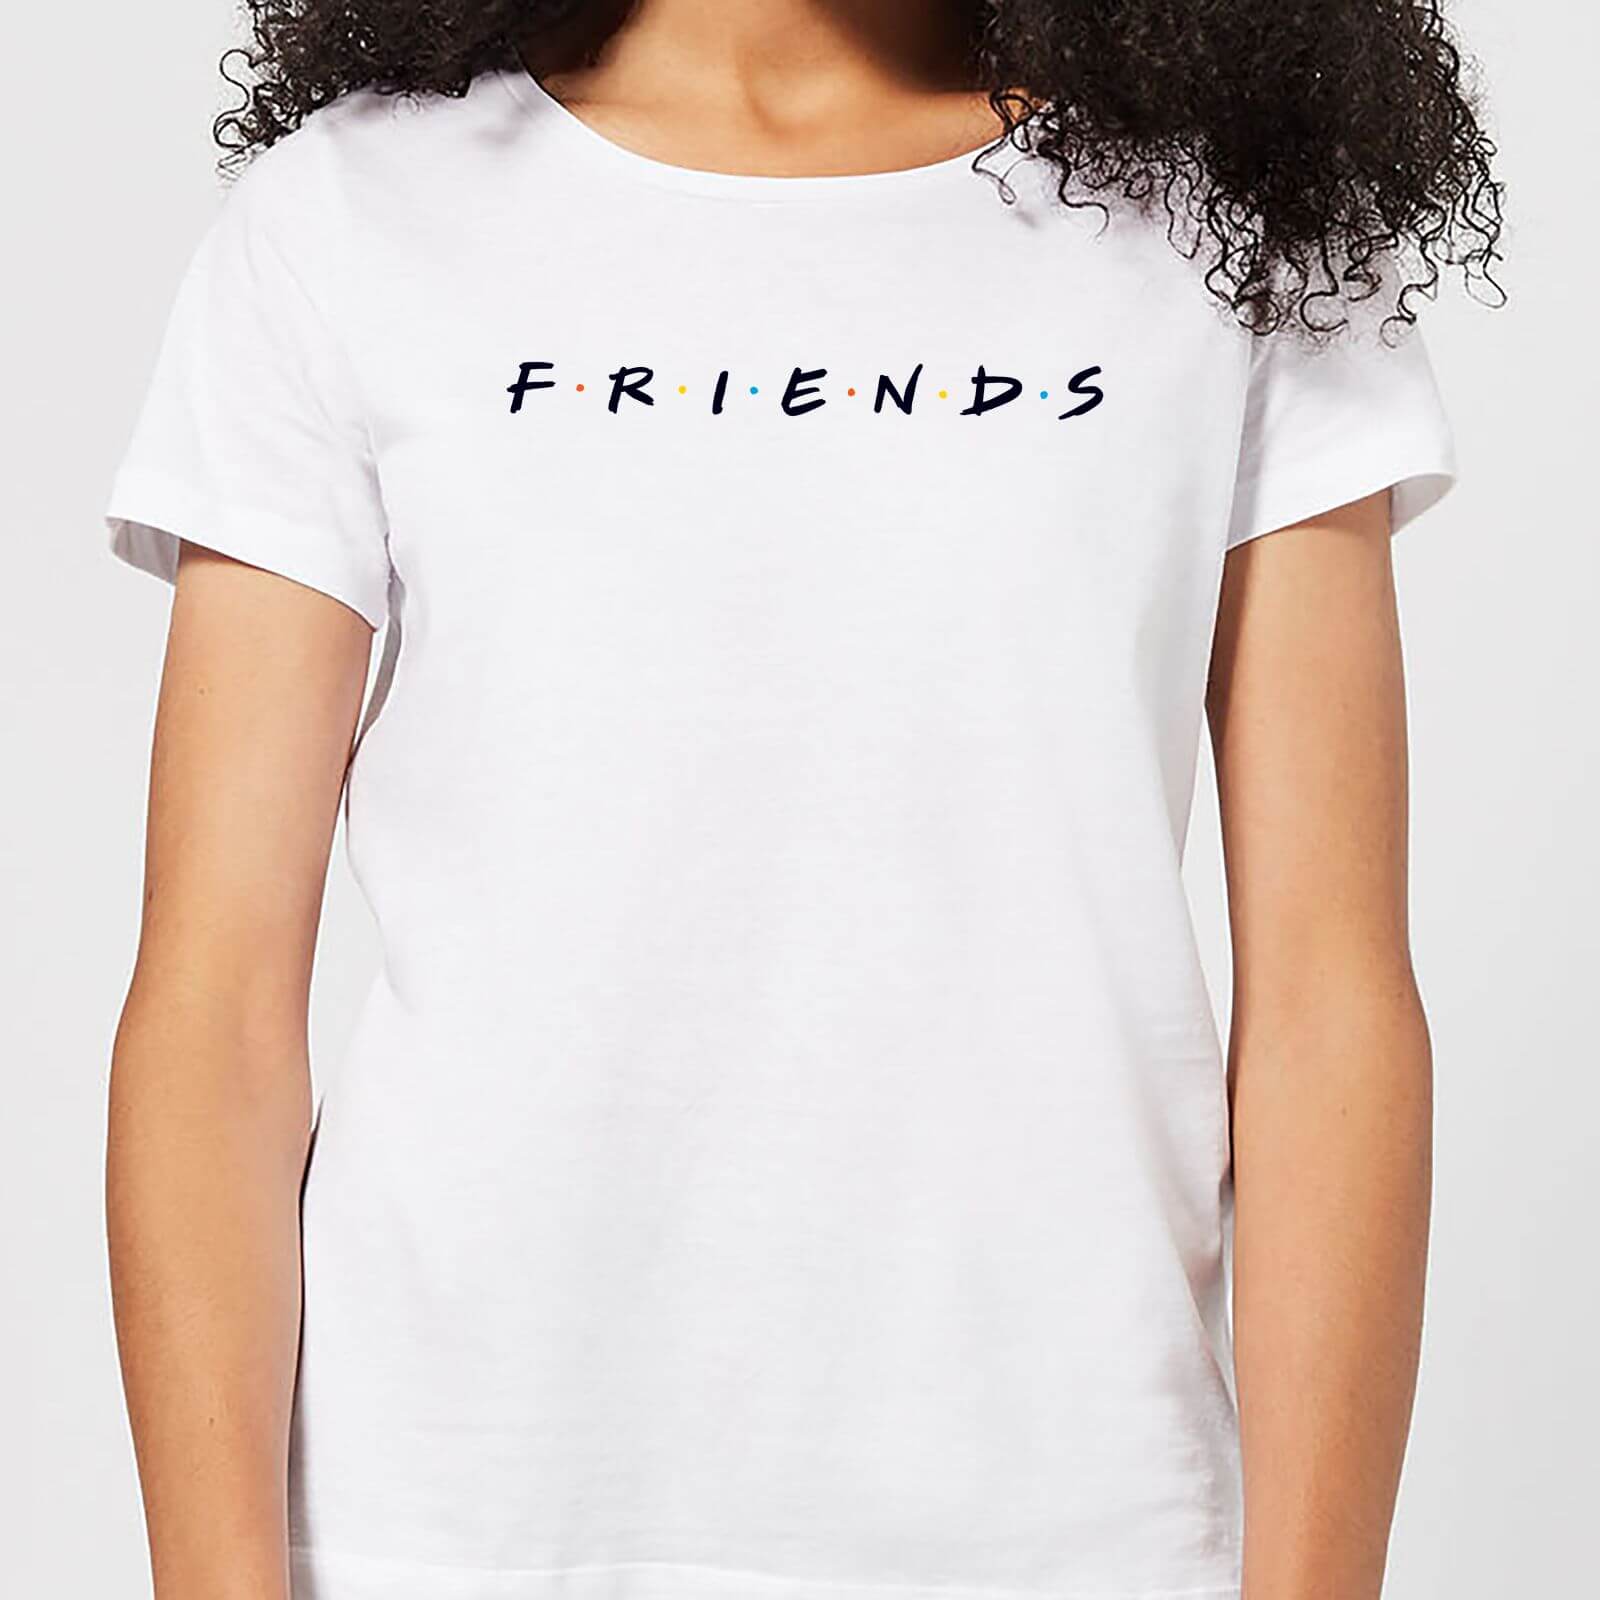 Friends Logo Women's T-Shirt - White - S